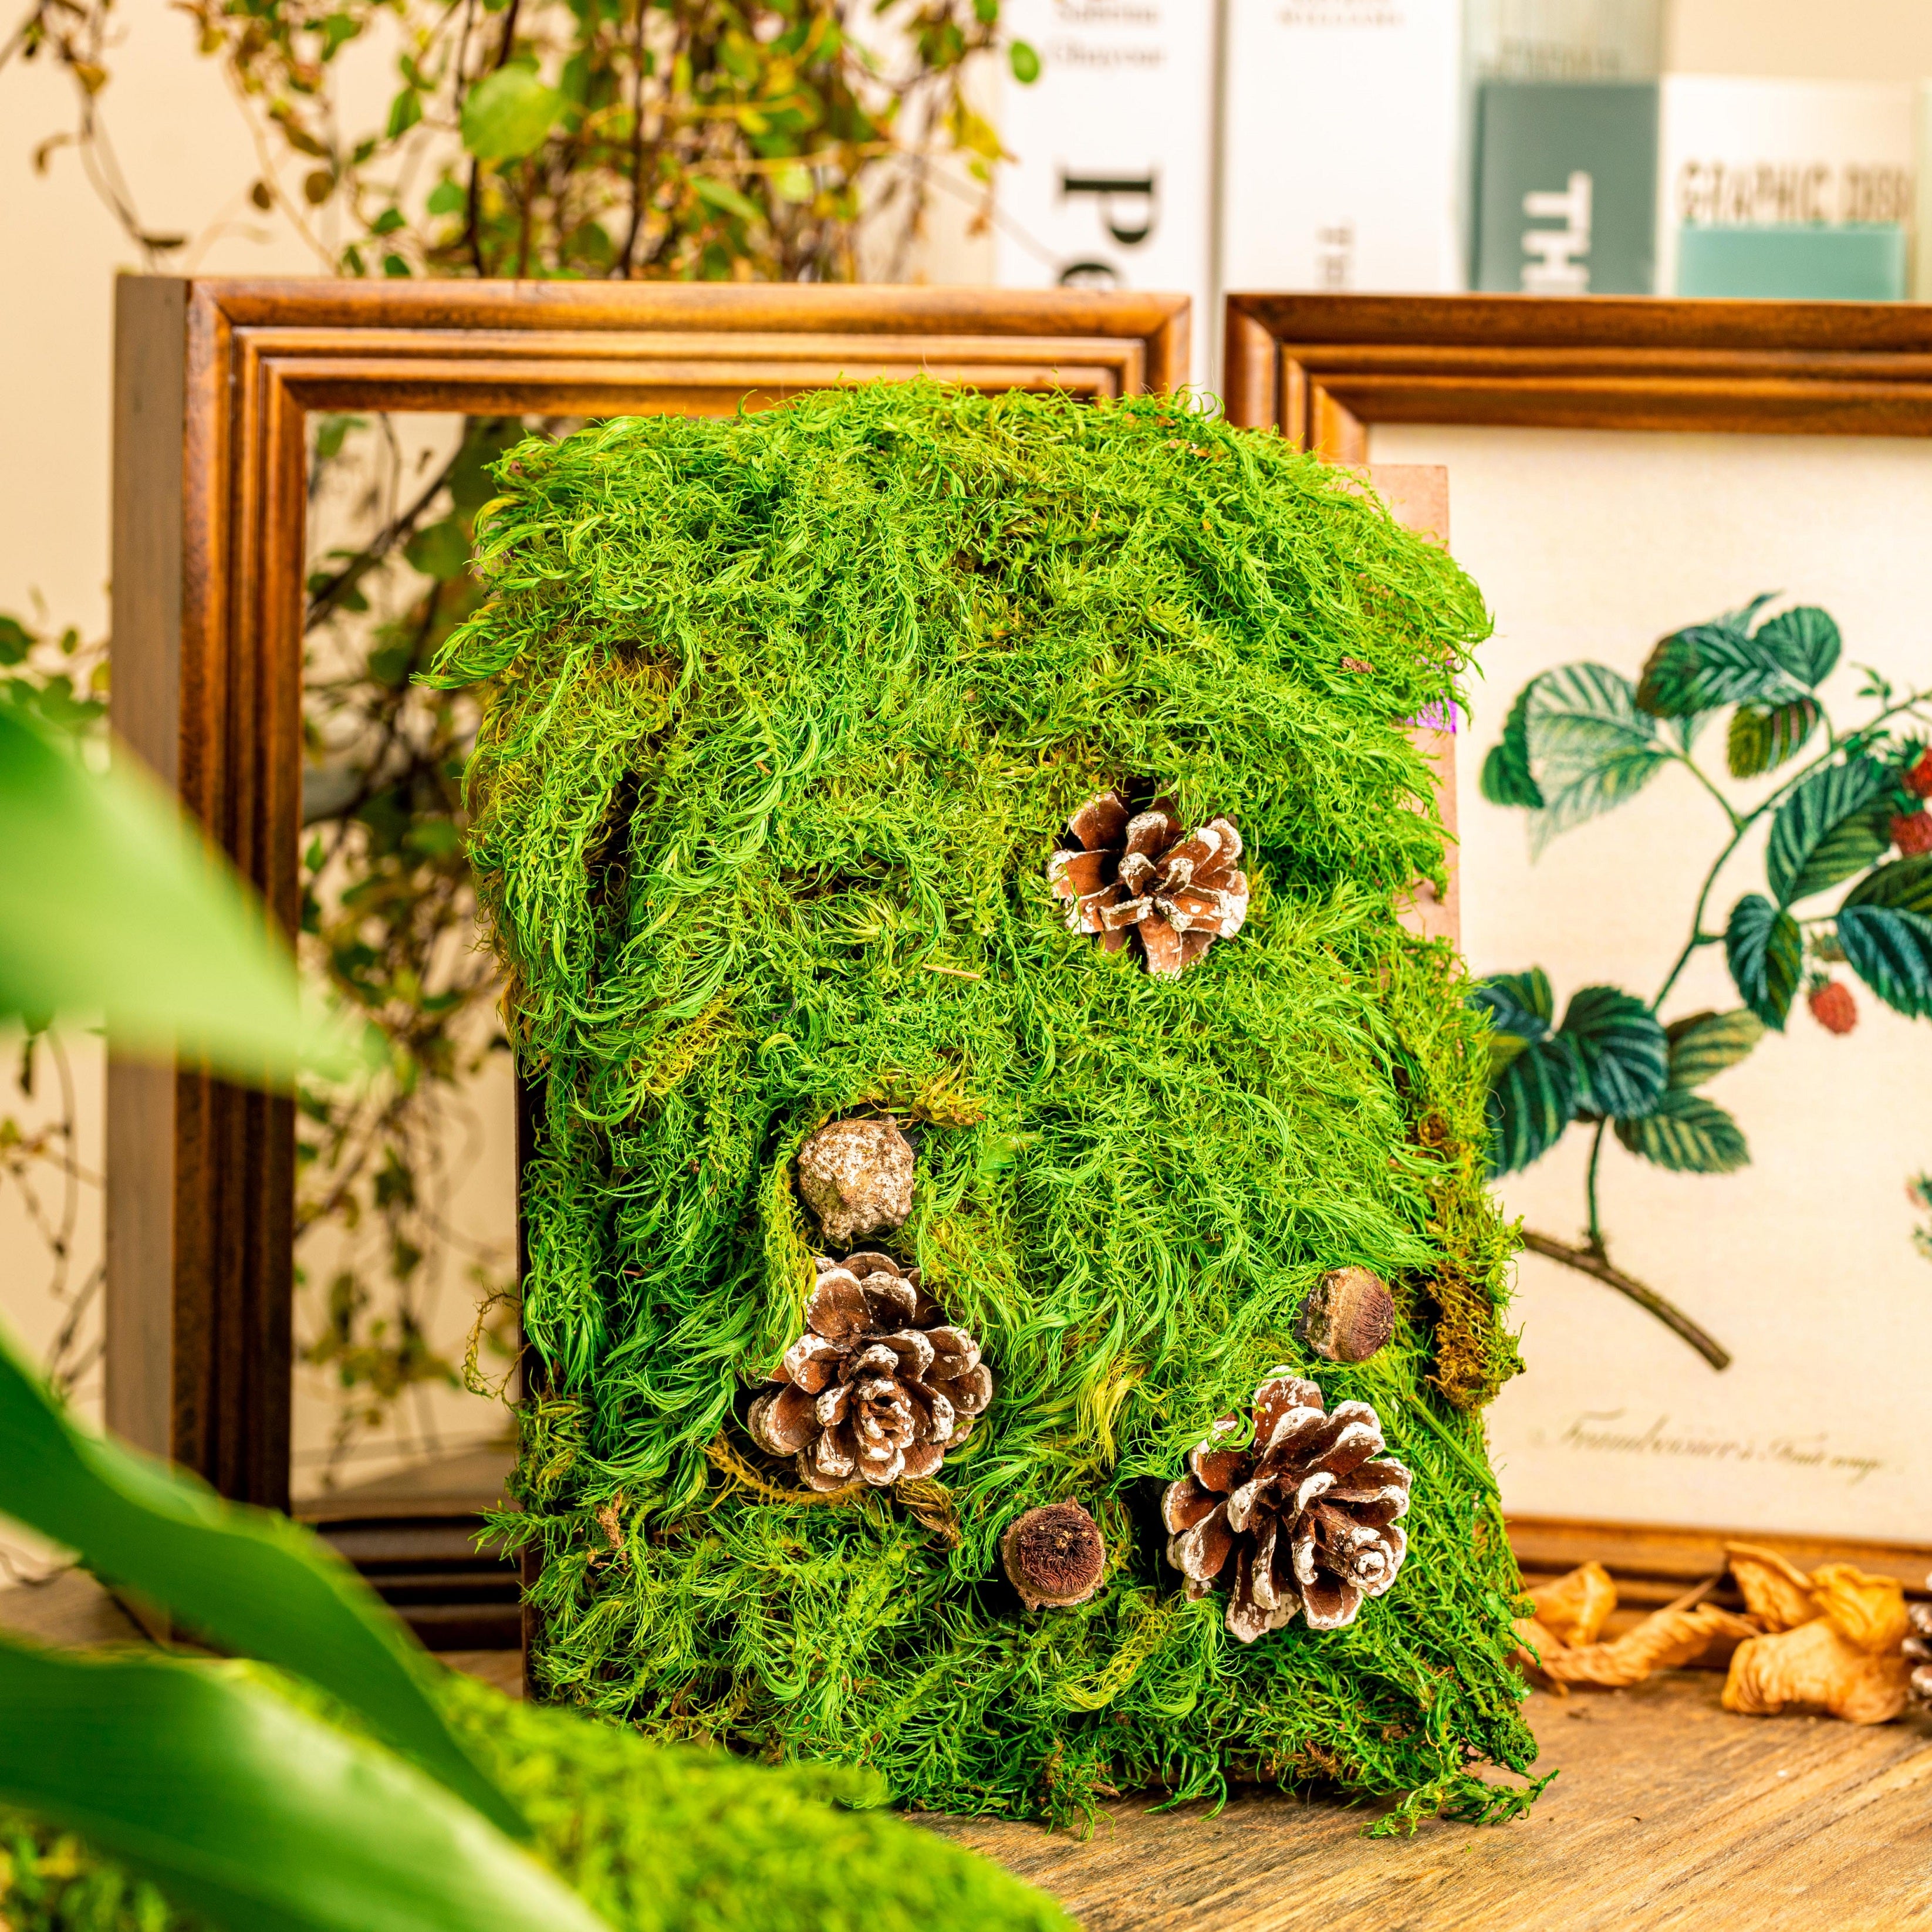 Terrarium Decor Rainforest Diorama Supplies Preserved Moss Half-handmade